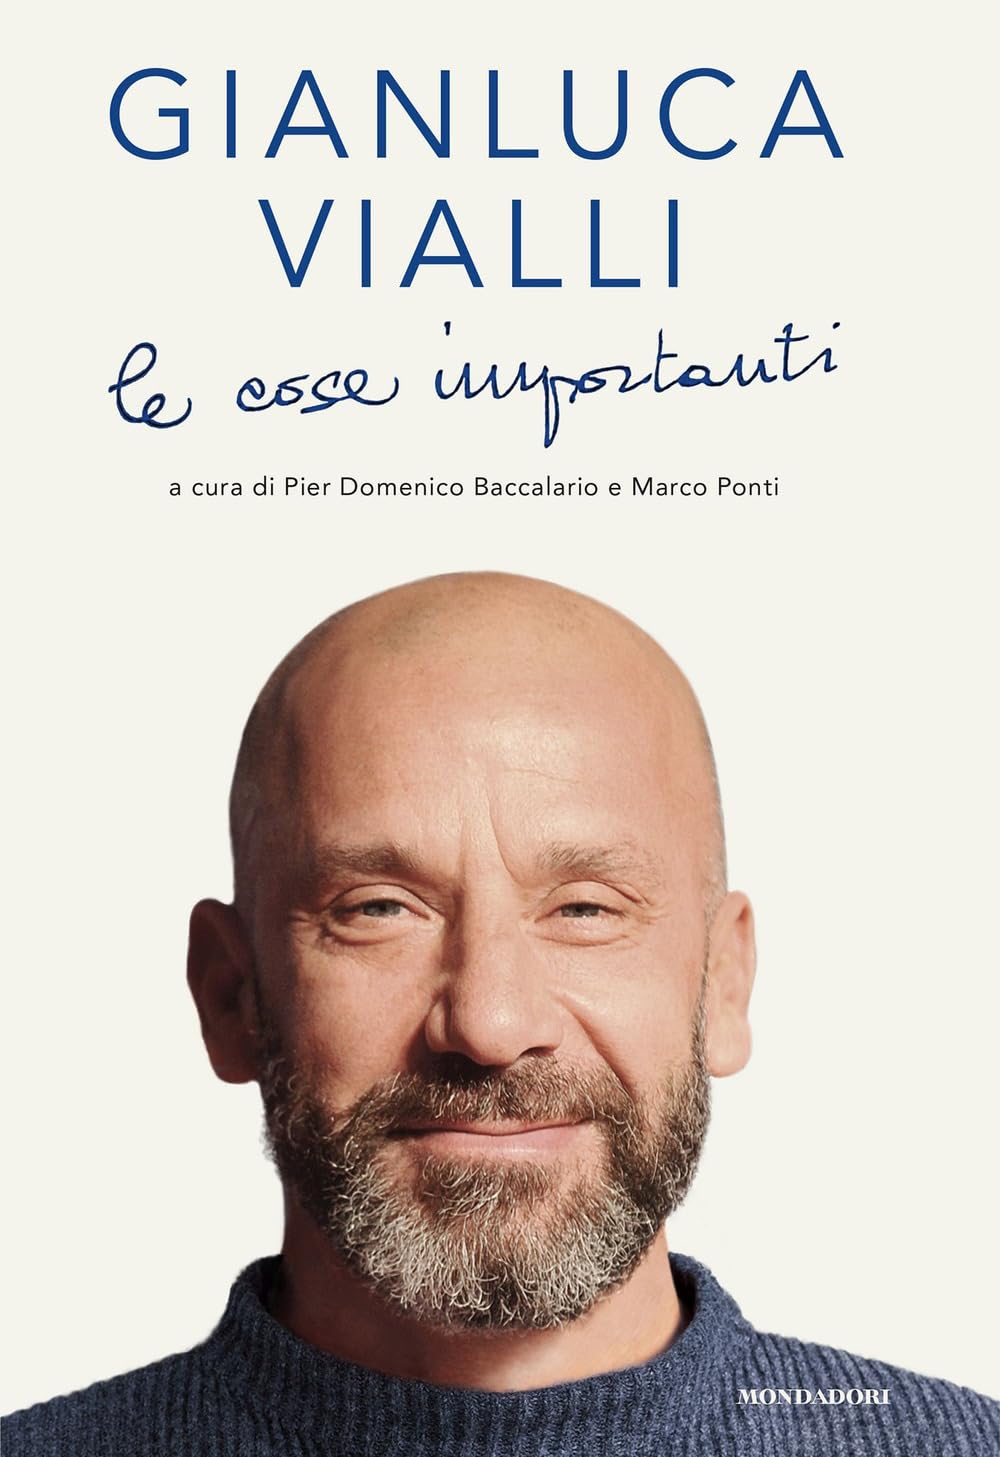 Gianluca Vialli: Le cose importanti (Italiano language, Mondadori)